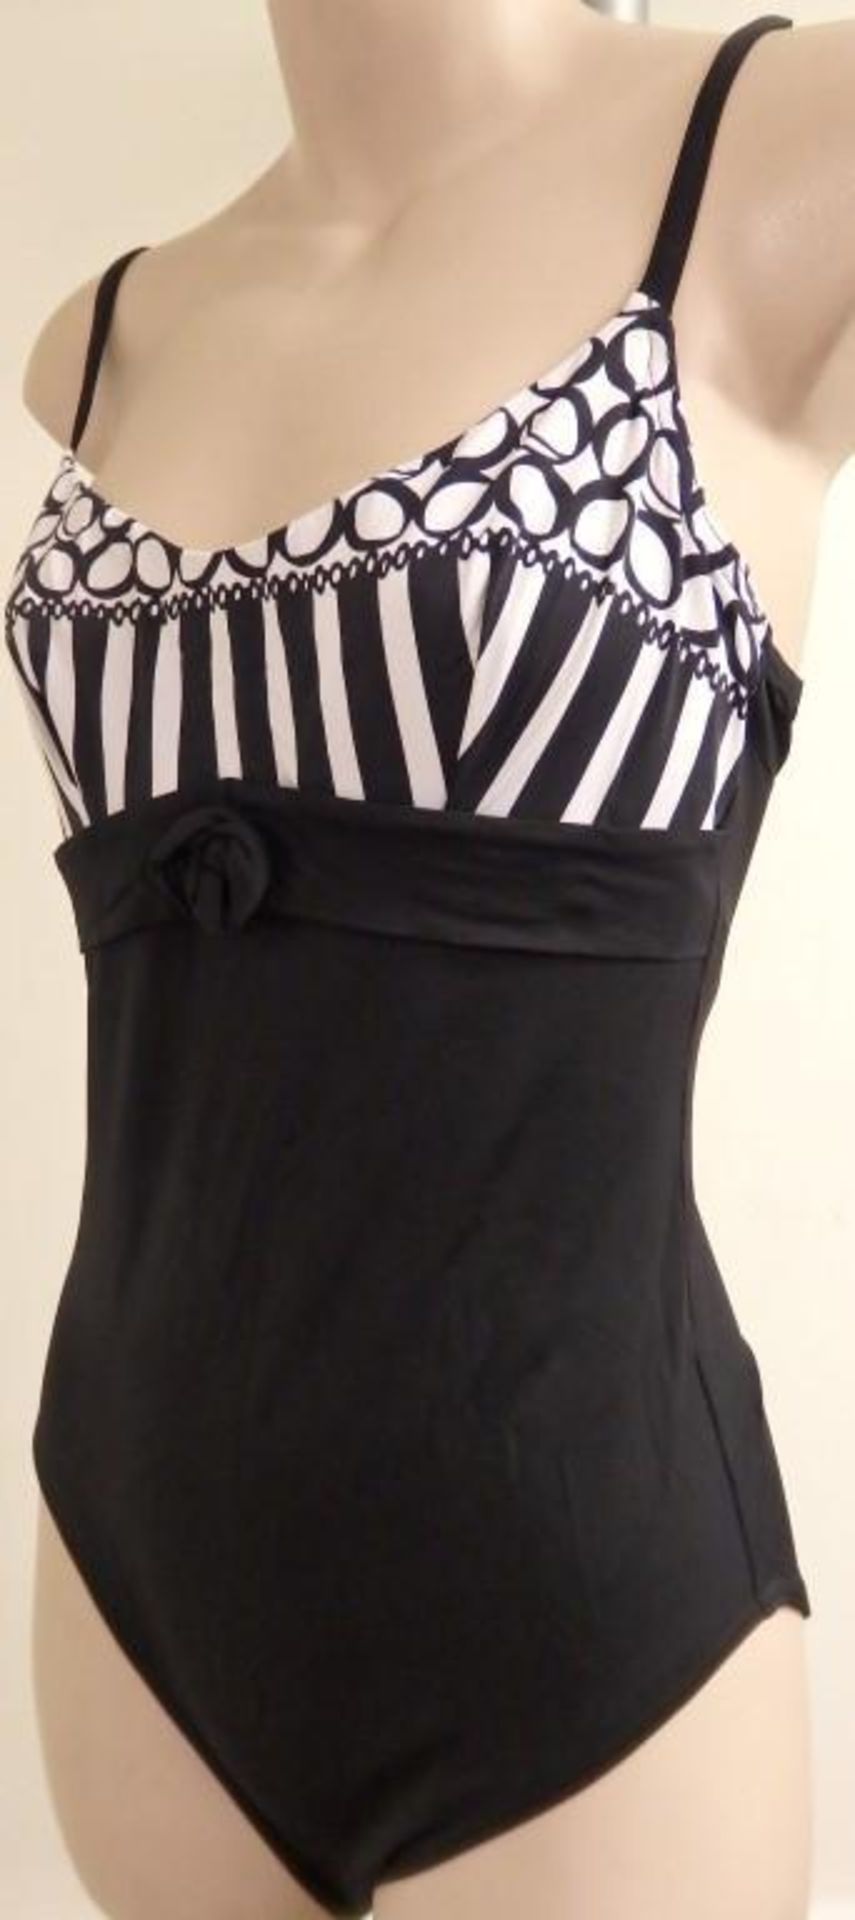 1 x Rasurel - Black/White patterned - Borneo Swimsuit - R20435 - Size 2C - UK 32 - Fr 85 - EU/Int 7